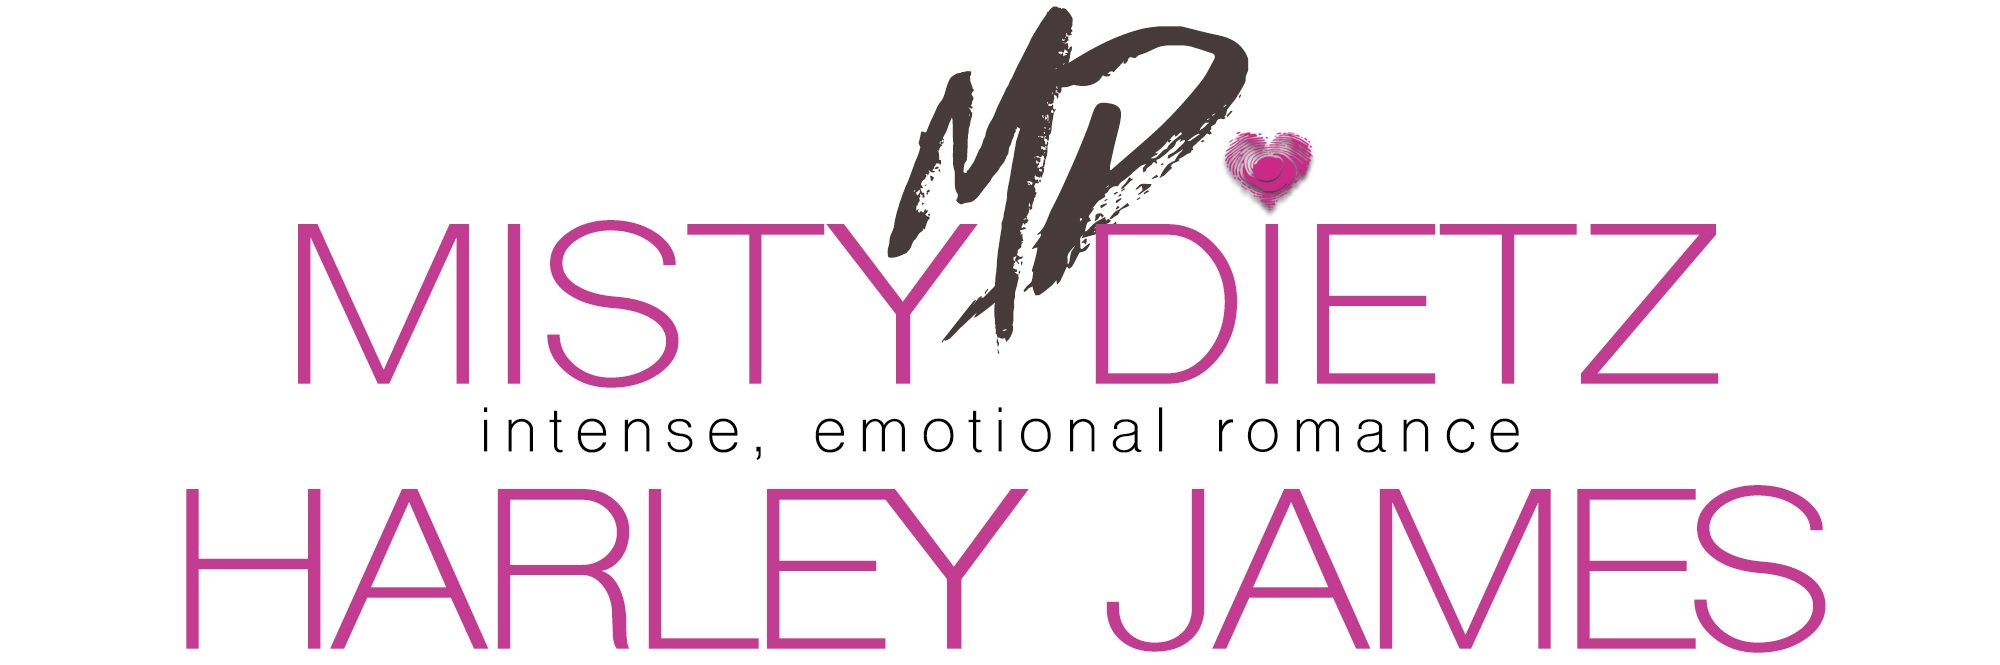 Misty Dietz + Harley James | intense, emotional romance